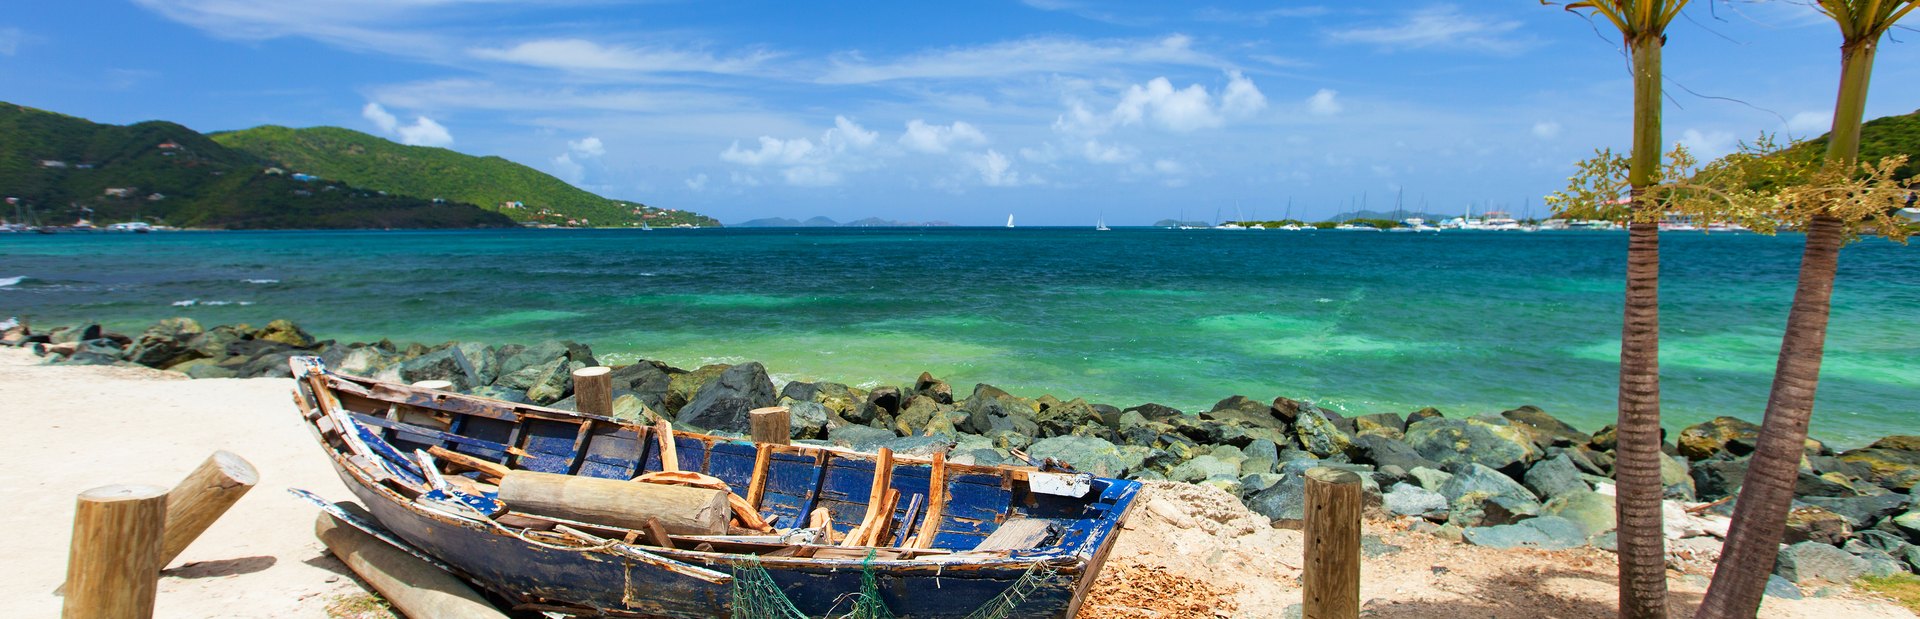 British Virgin Islands photo tour